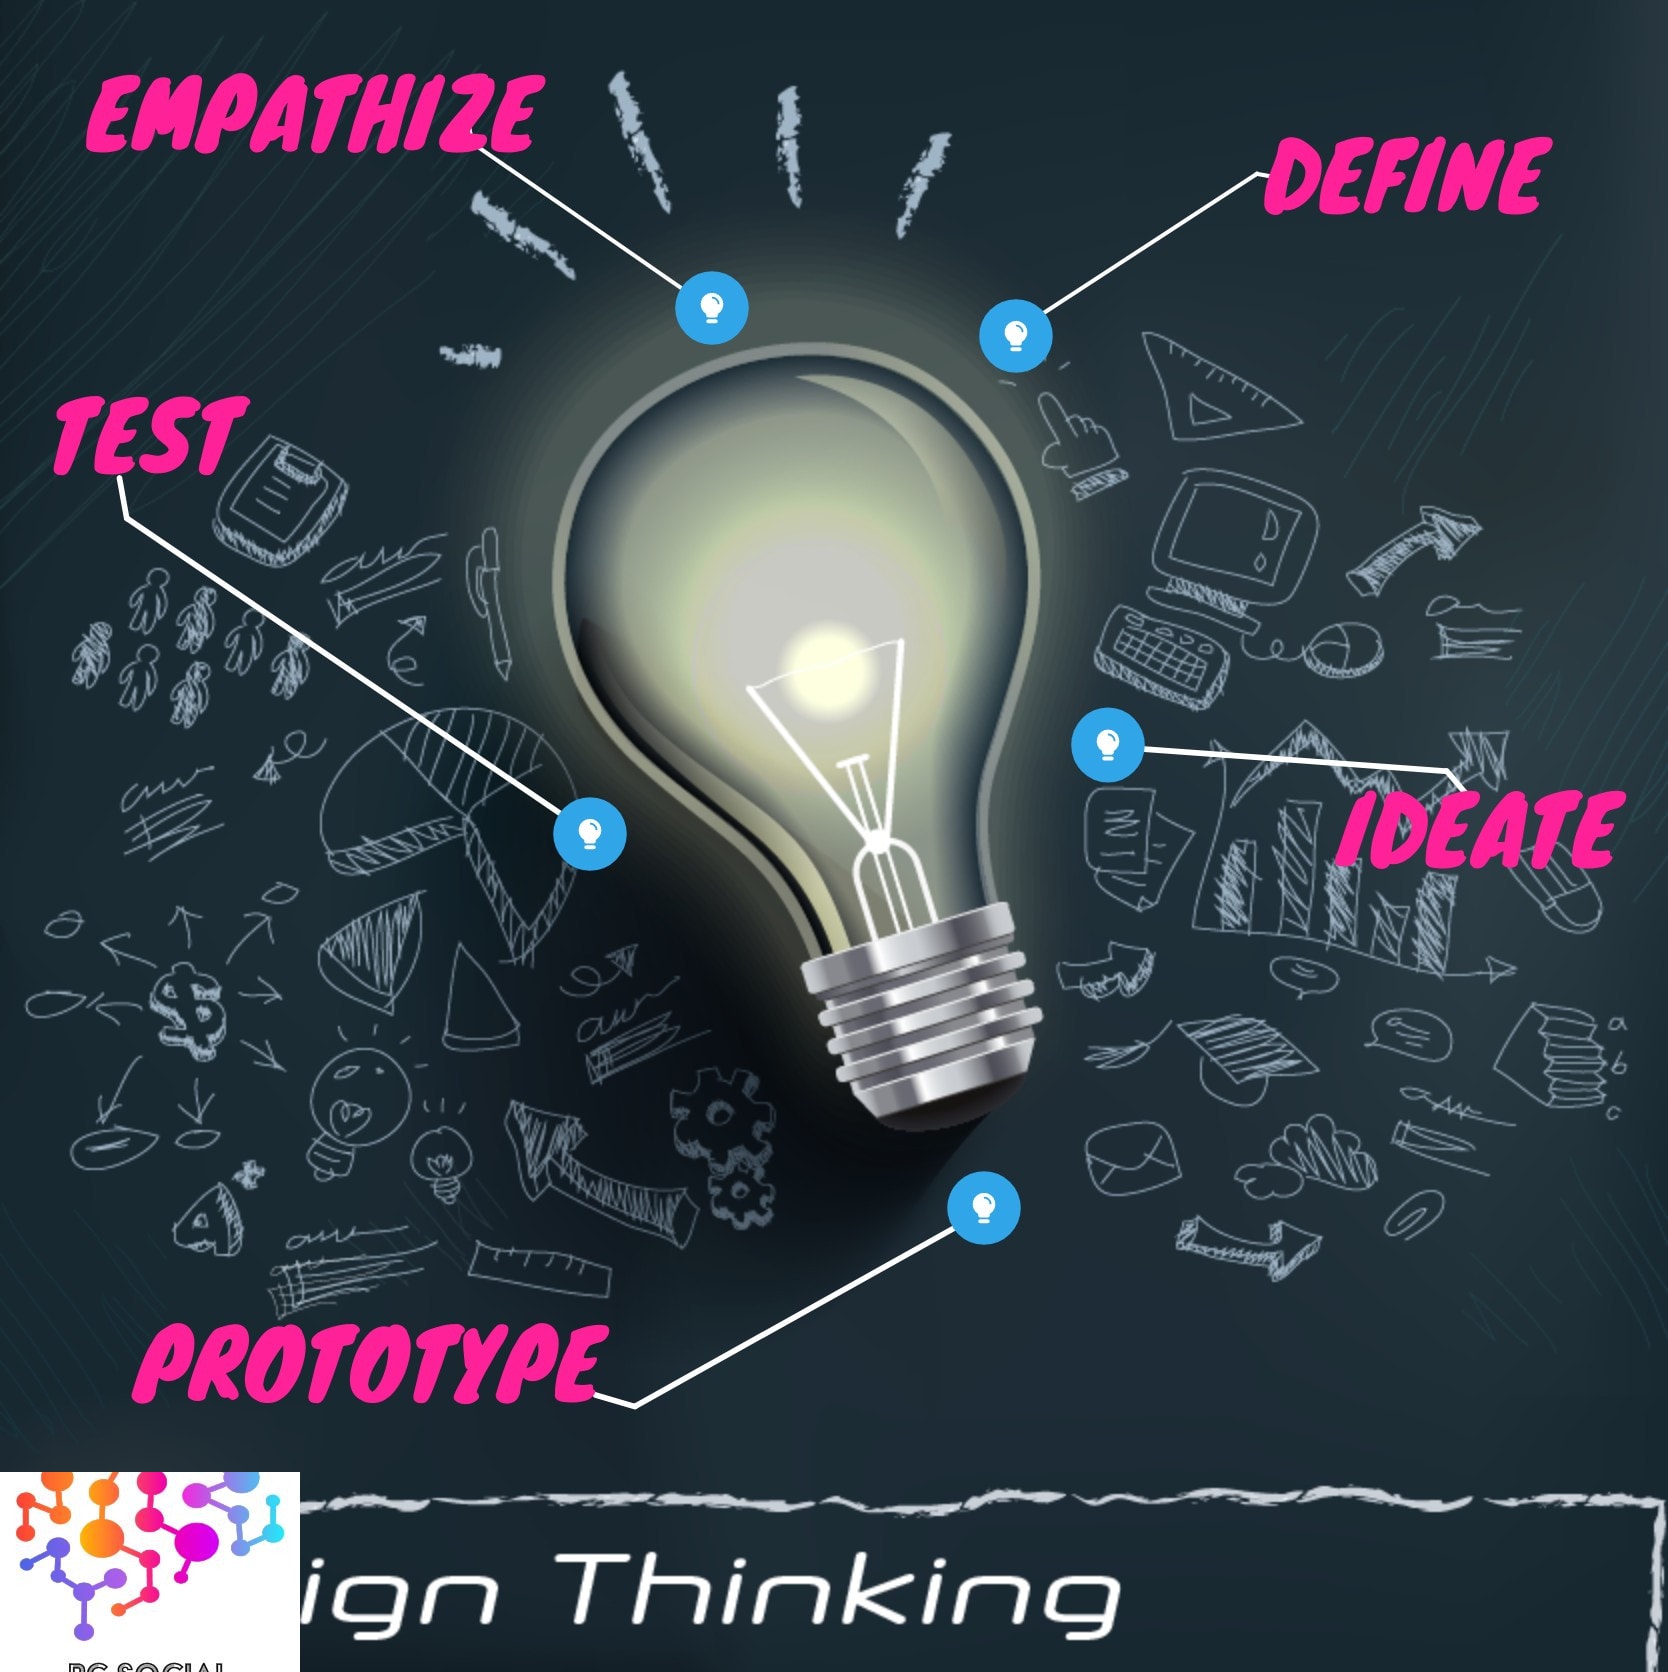 Creativity, Design, Define, Prototype, Insights, Test, Product Marketing,